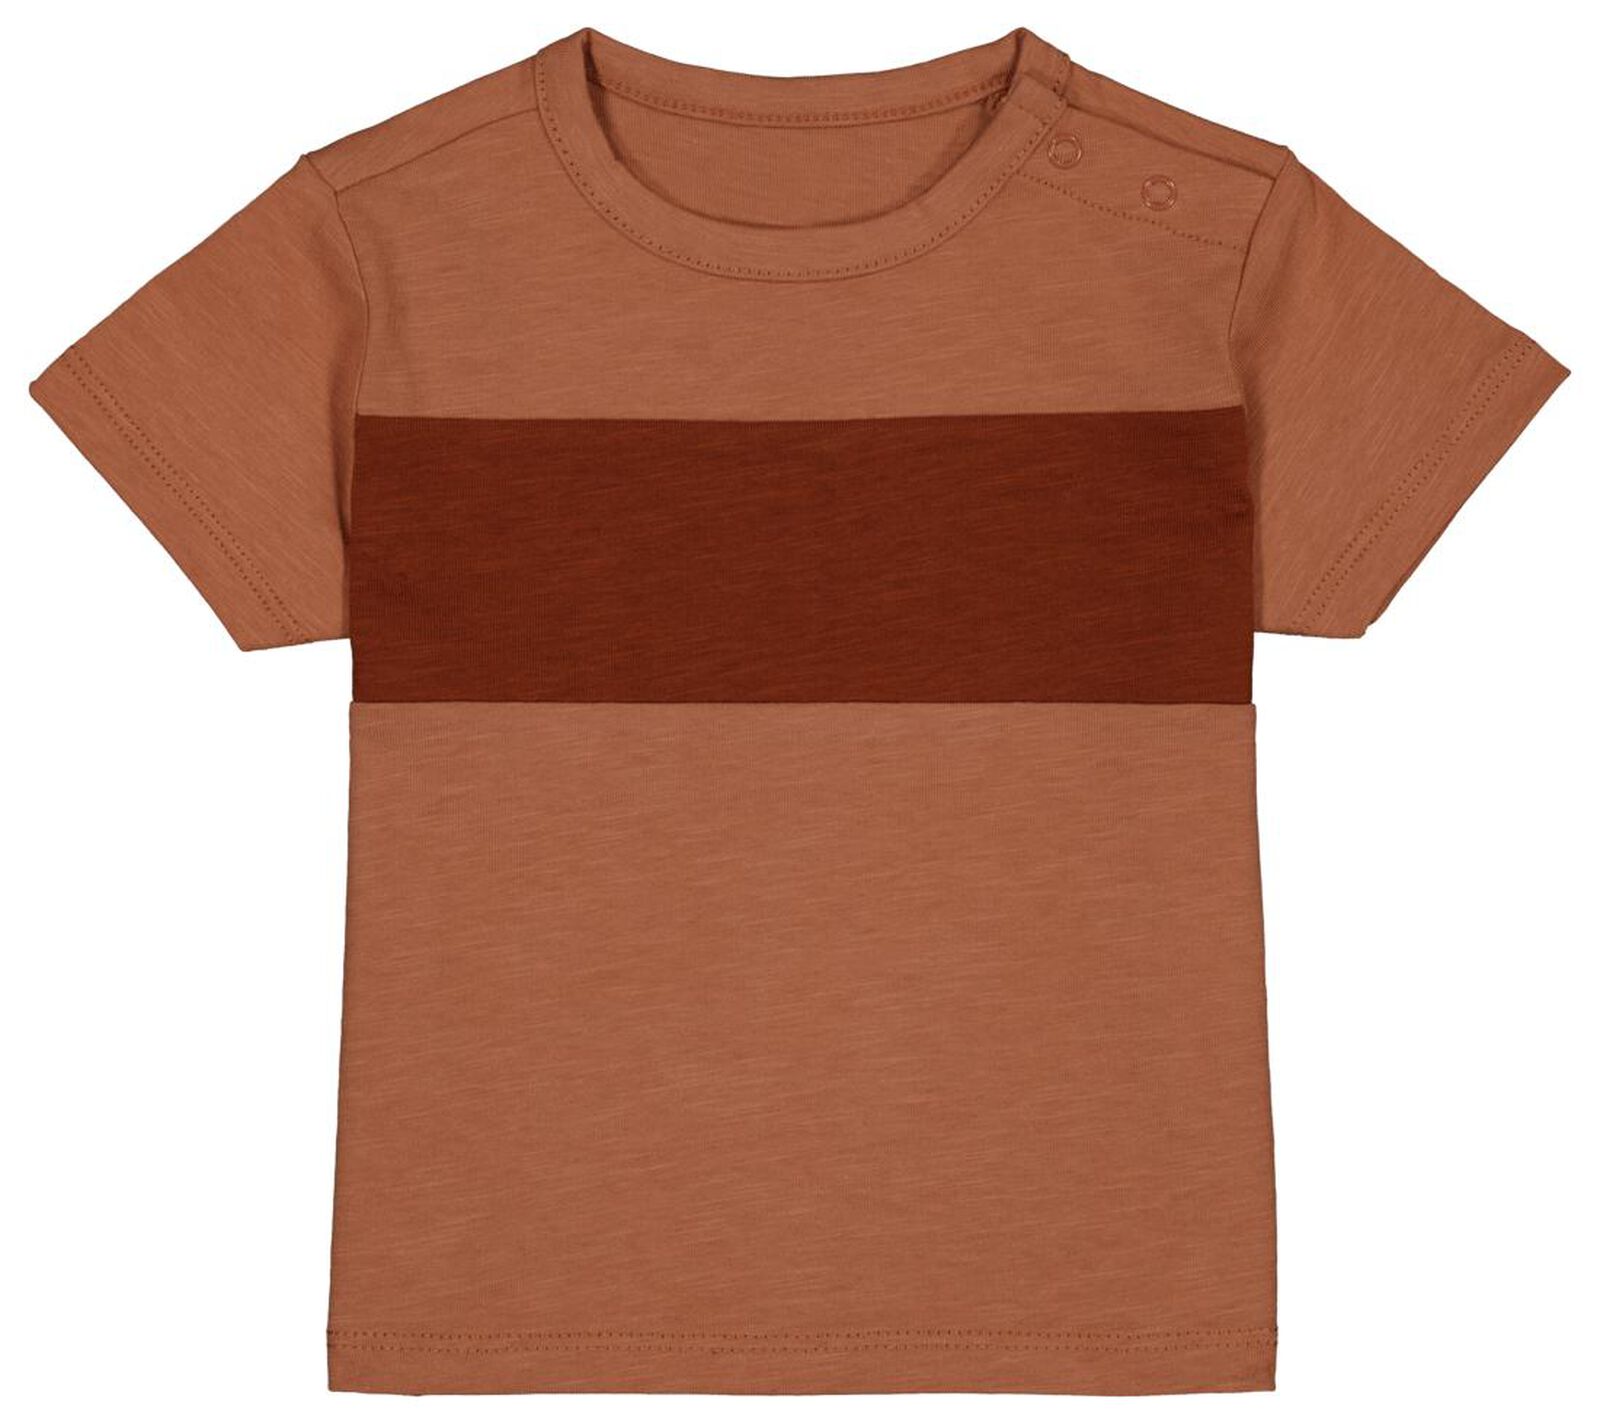 Kinder-T-Shirt, Colorblocking braun HEMA 